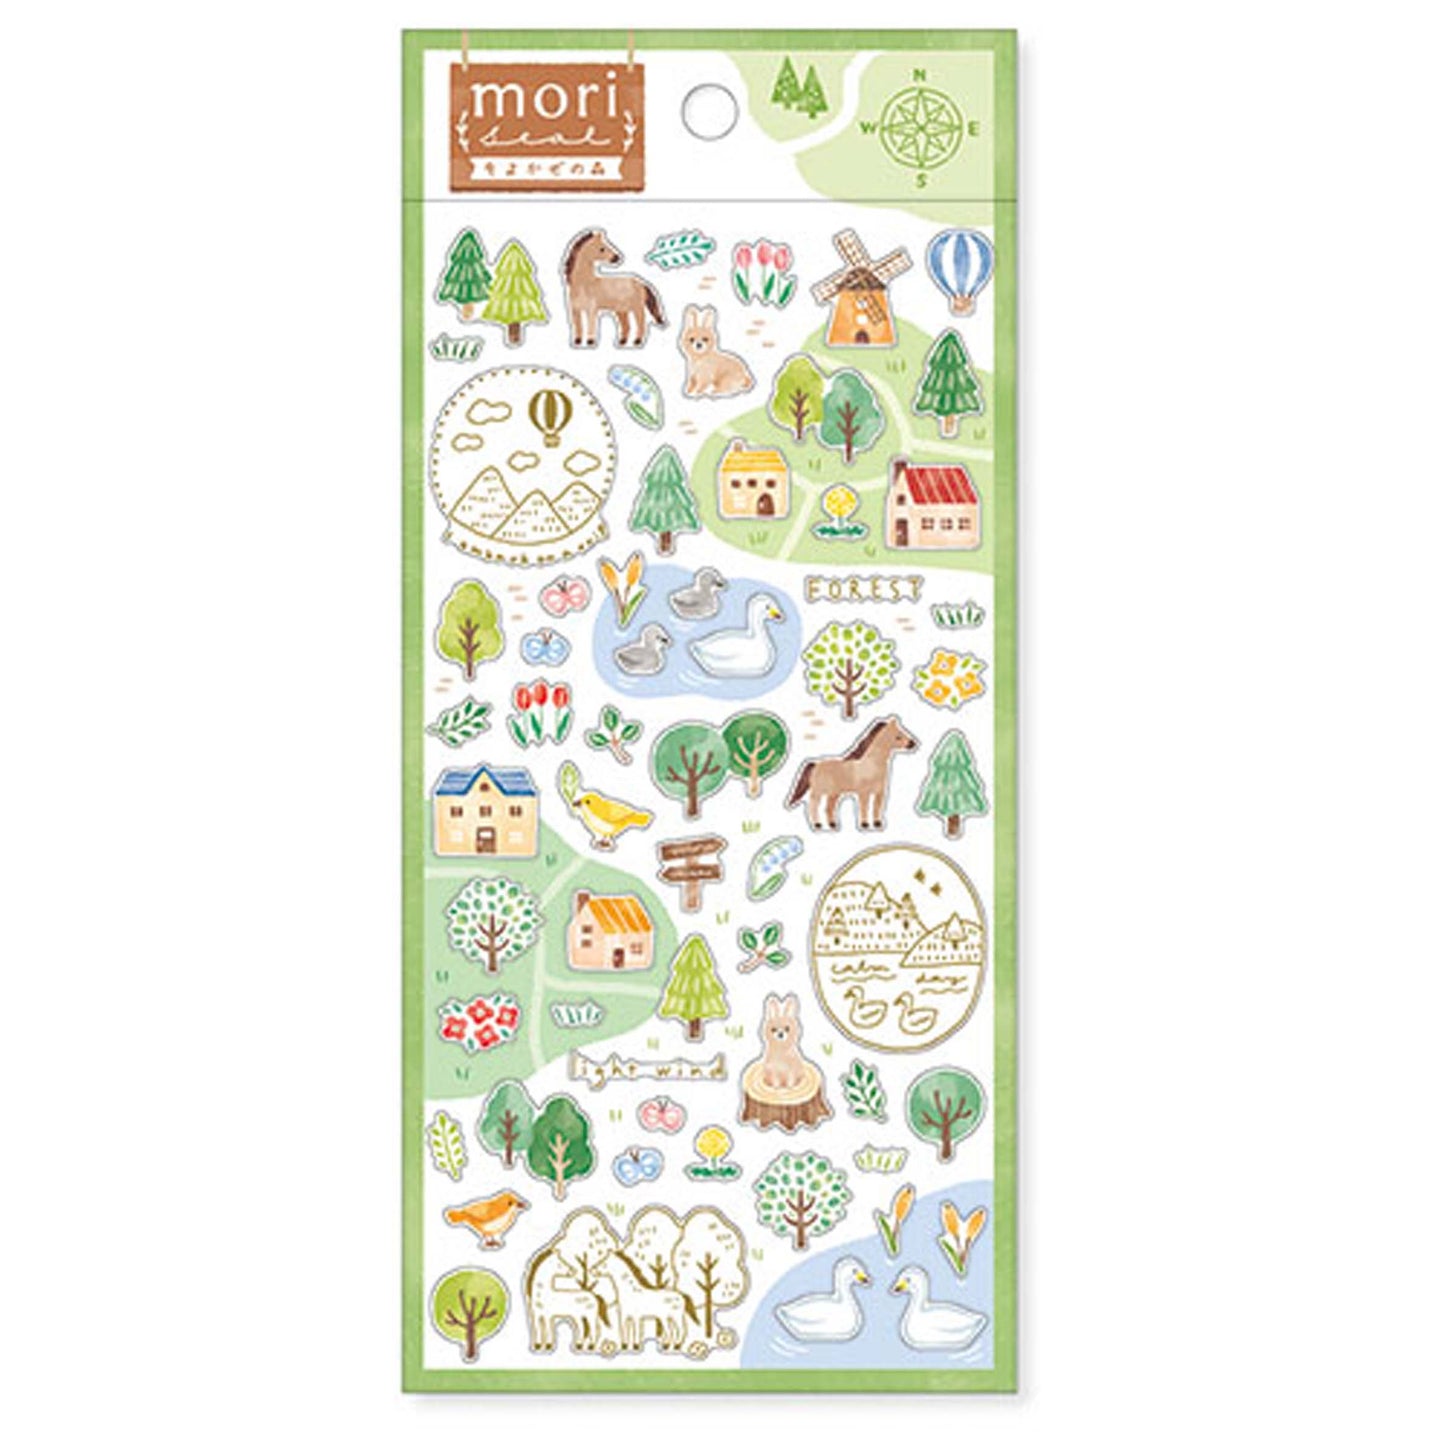 Mind Wave - Mori Forest Theme Sticker